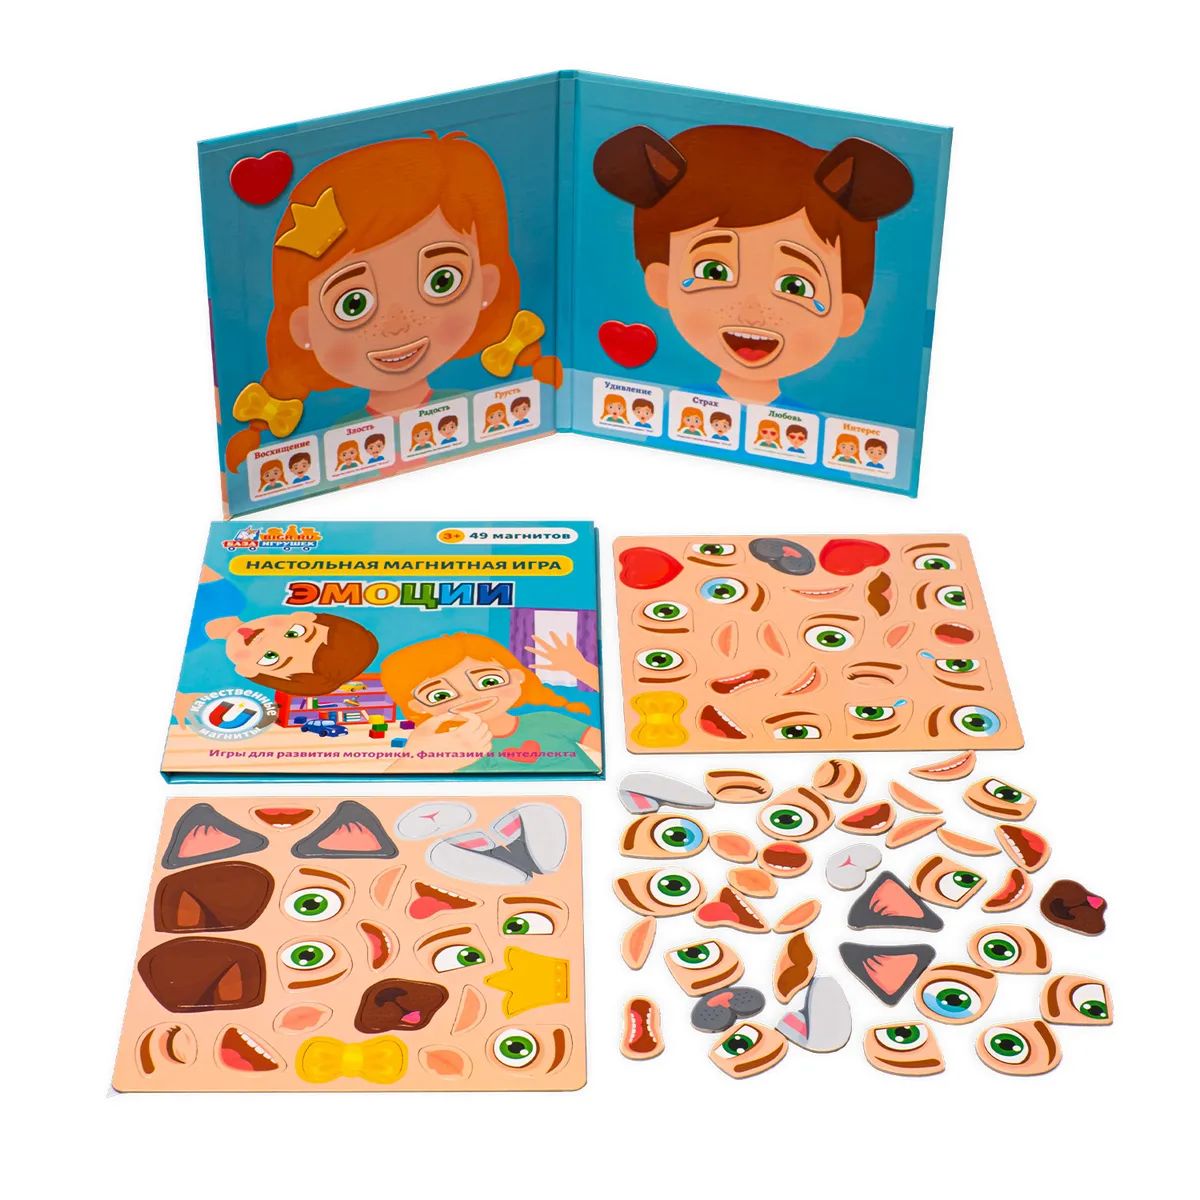 Магнитная игра для детей Бигр Эмоции мини, УД61 магнитная рыбалка для детей